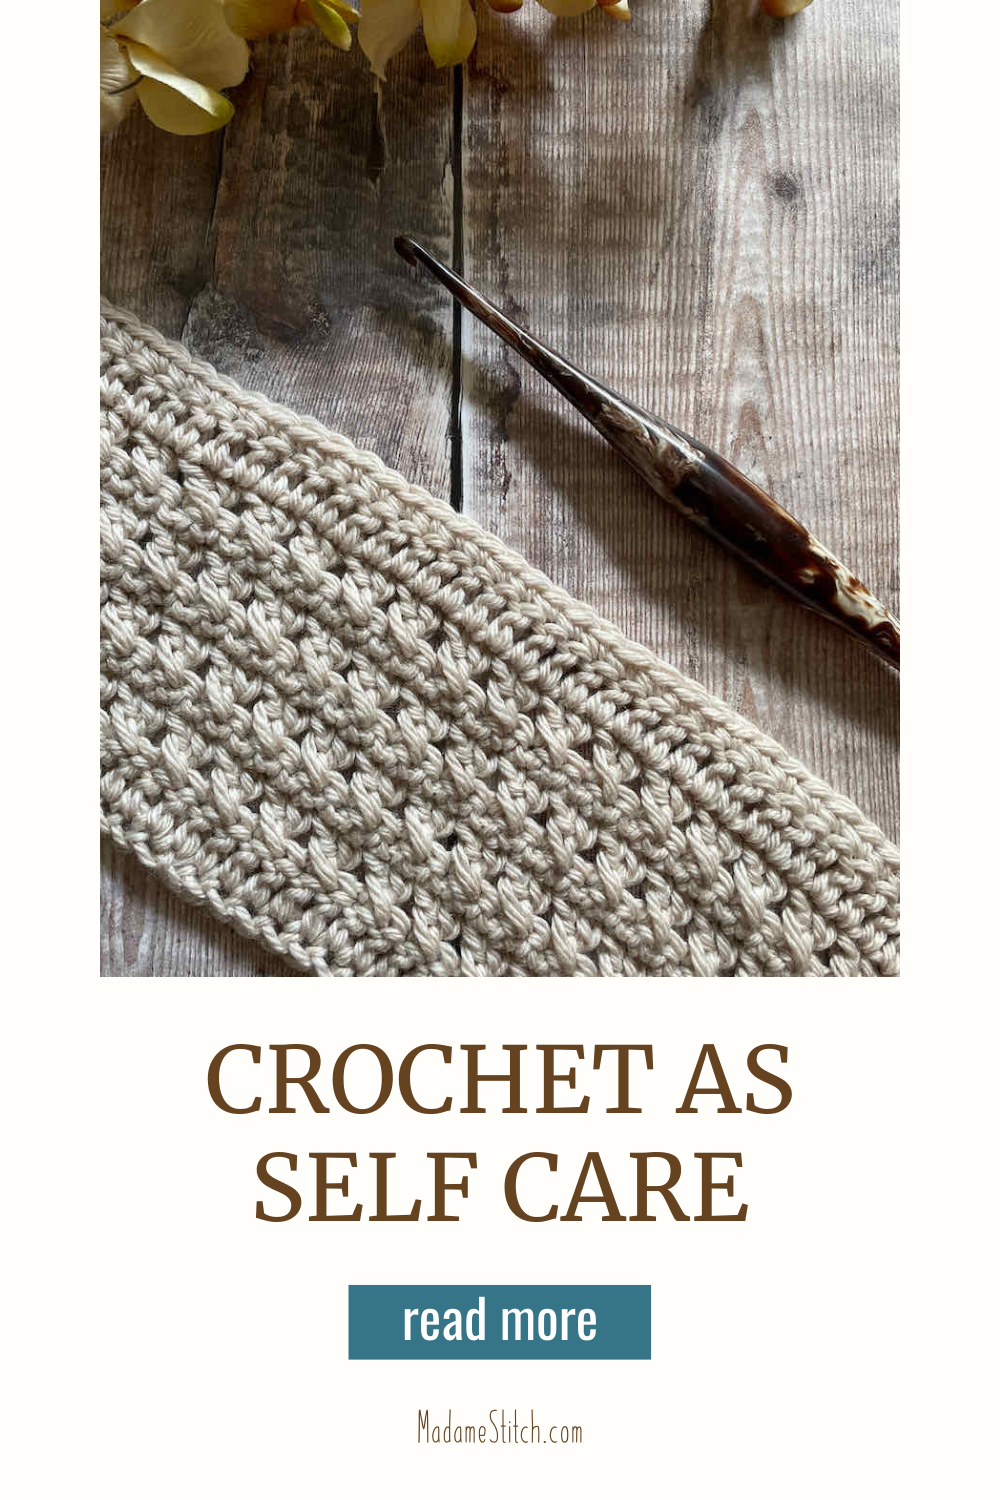 Crochet as self care blog post